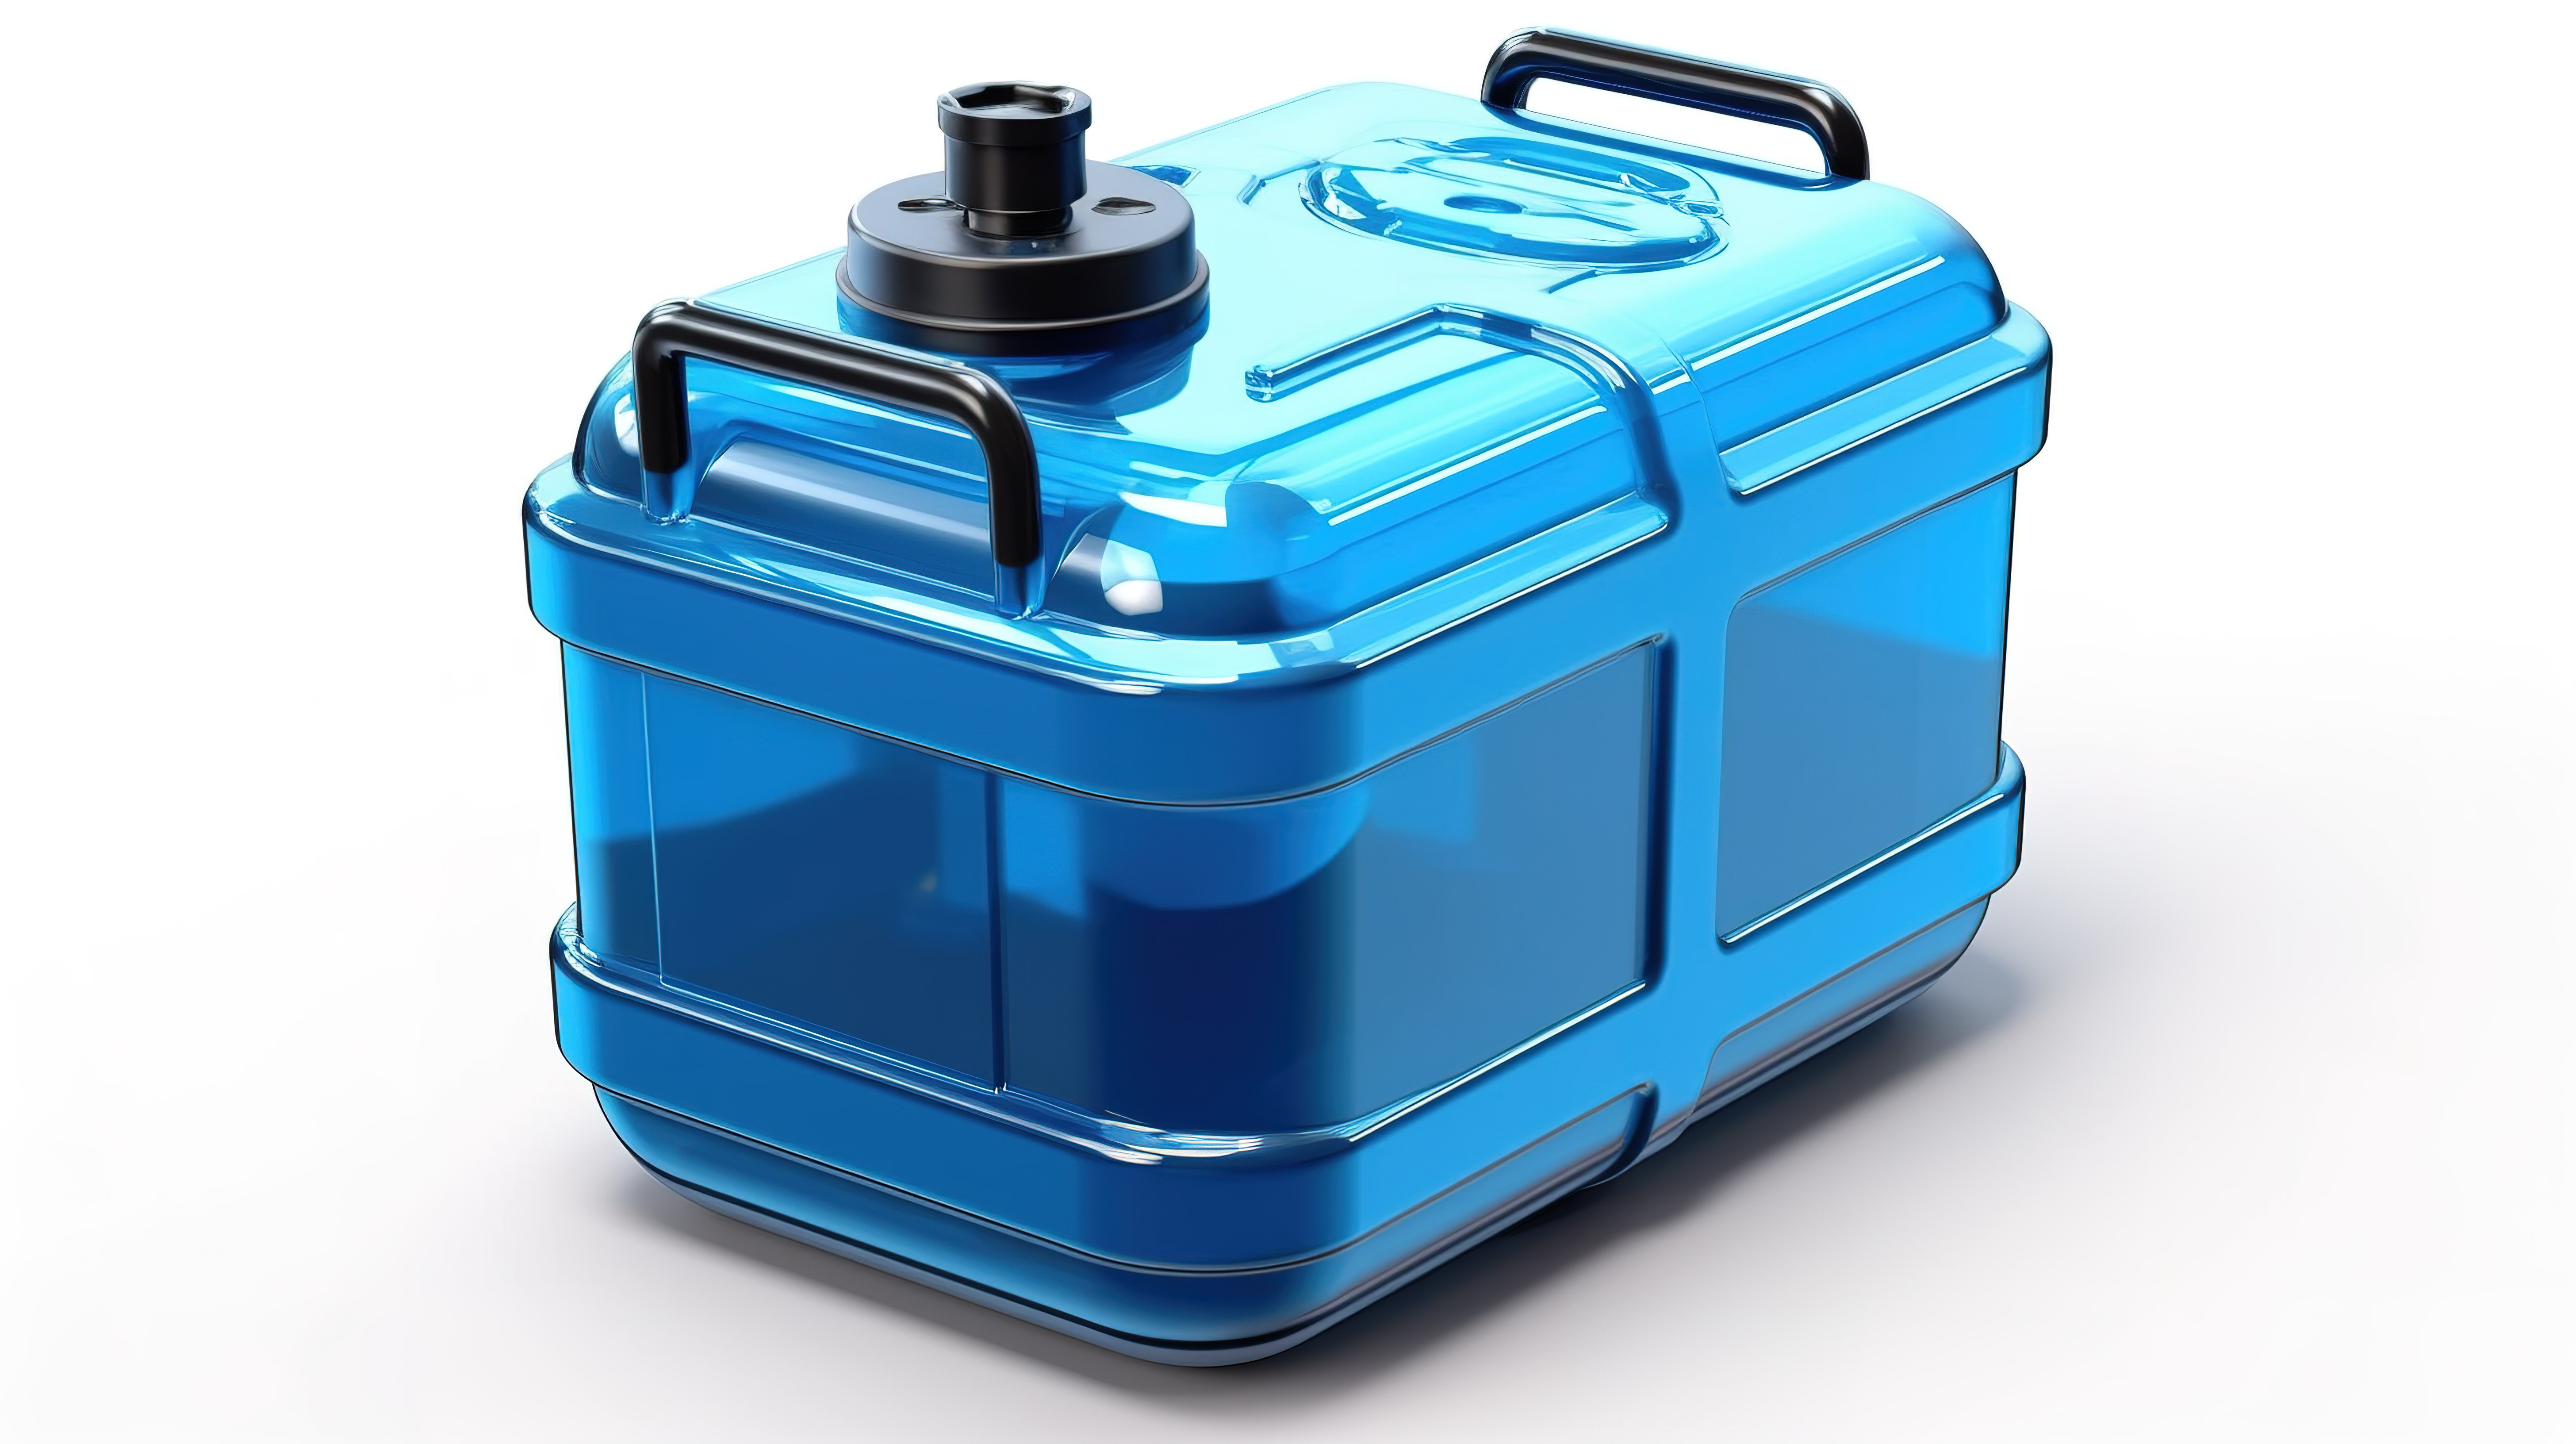 3D 插图隔离塑料罐，带有蓝色汽车液体防冻剂或雨刮器，白色背景图片